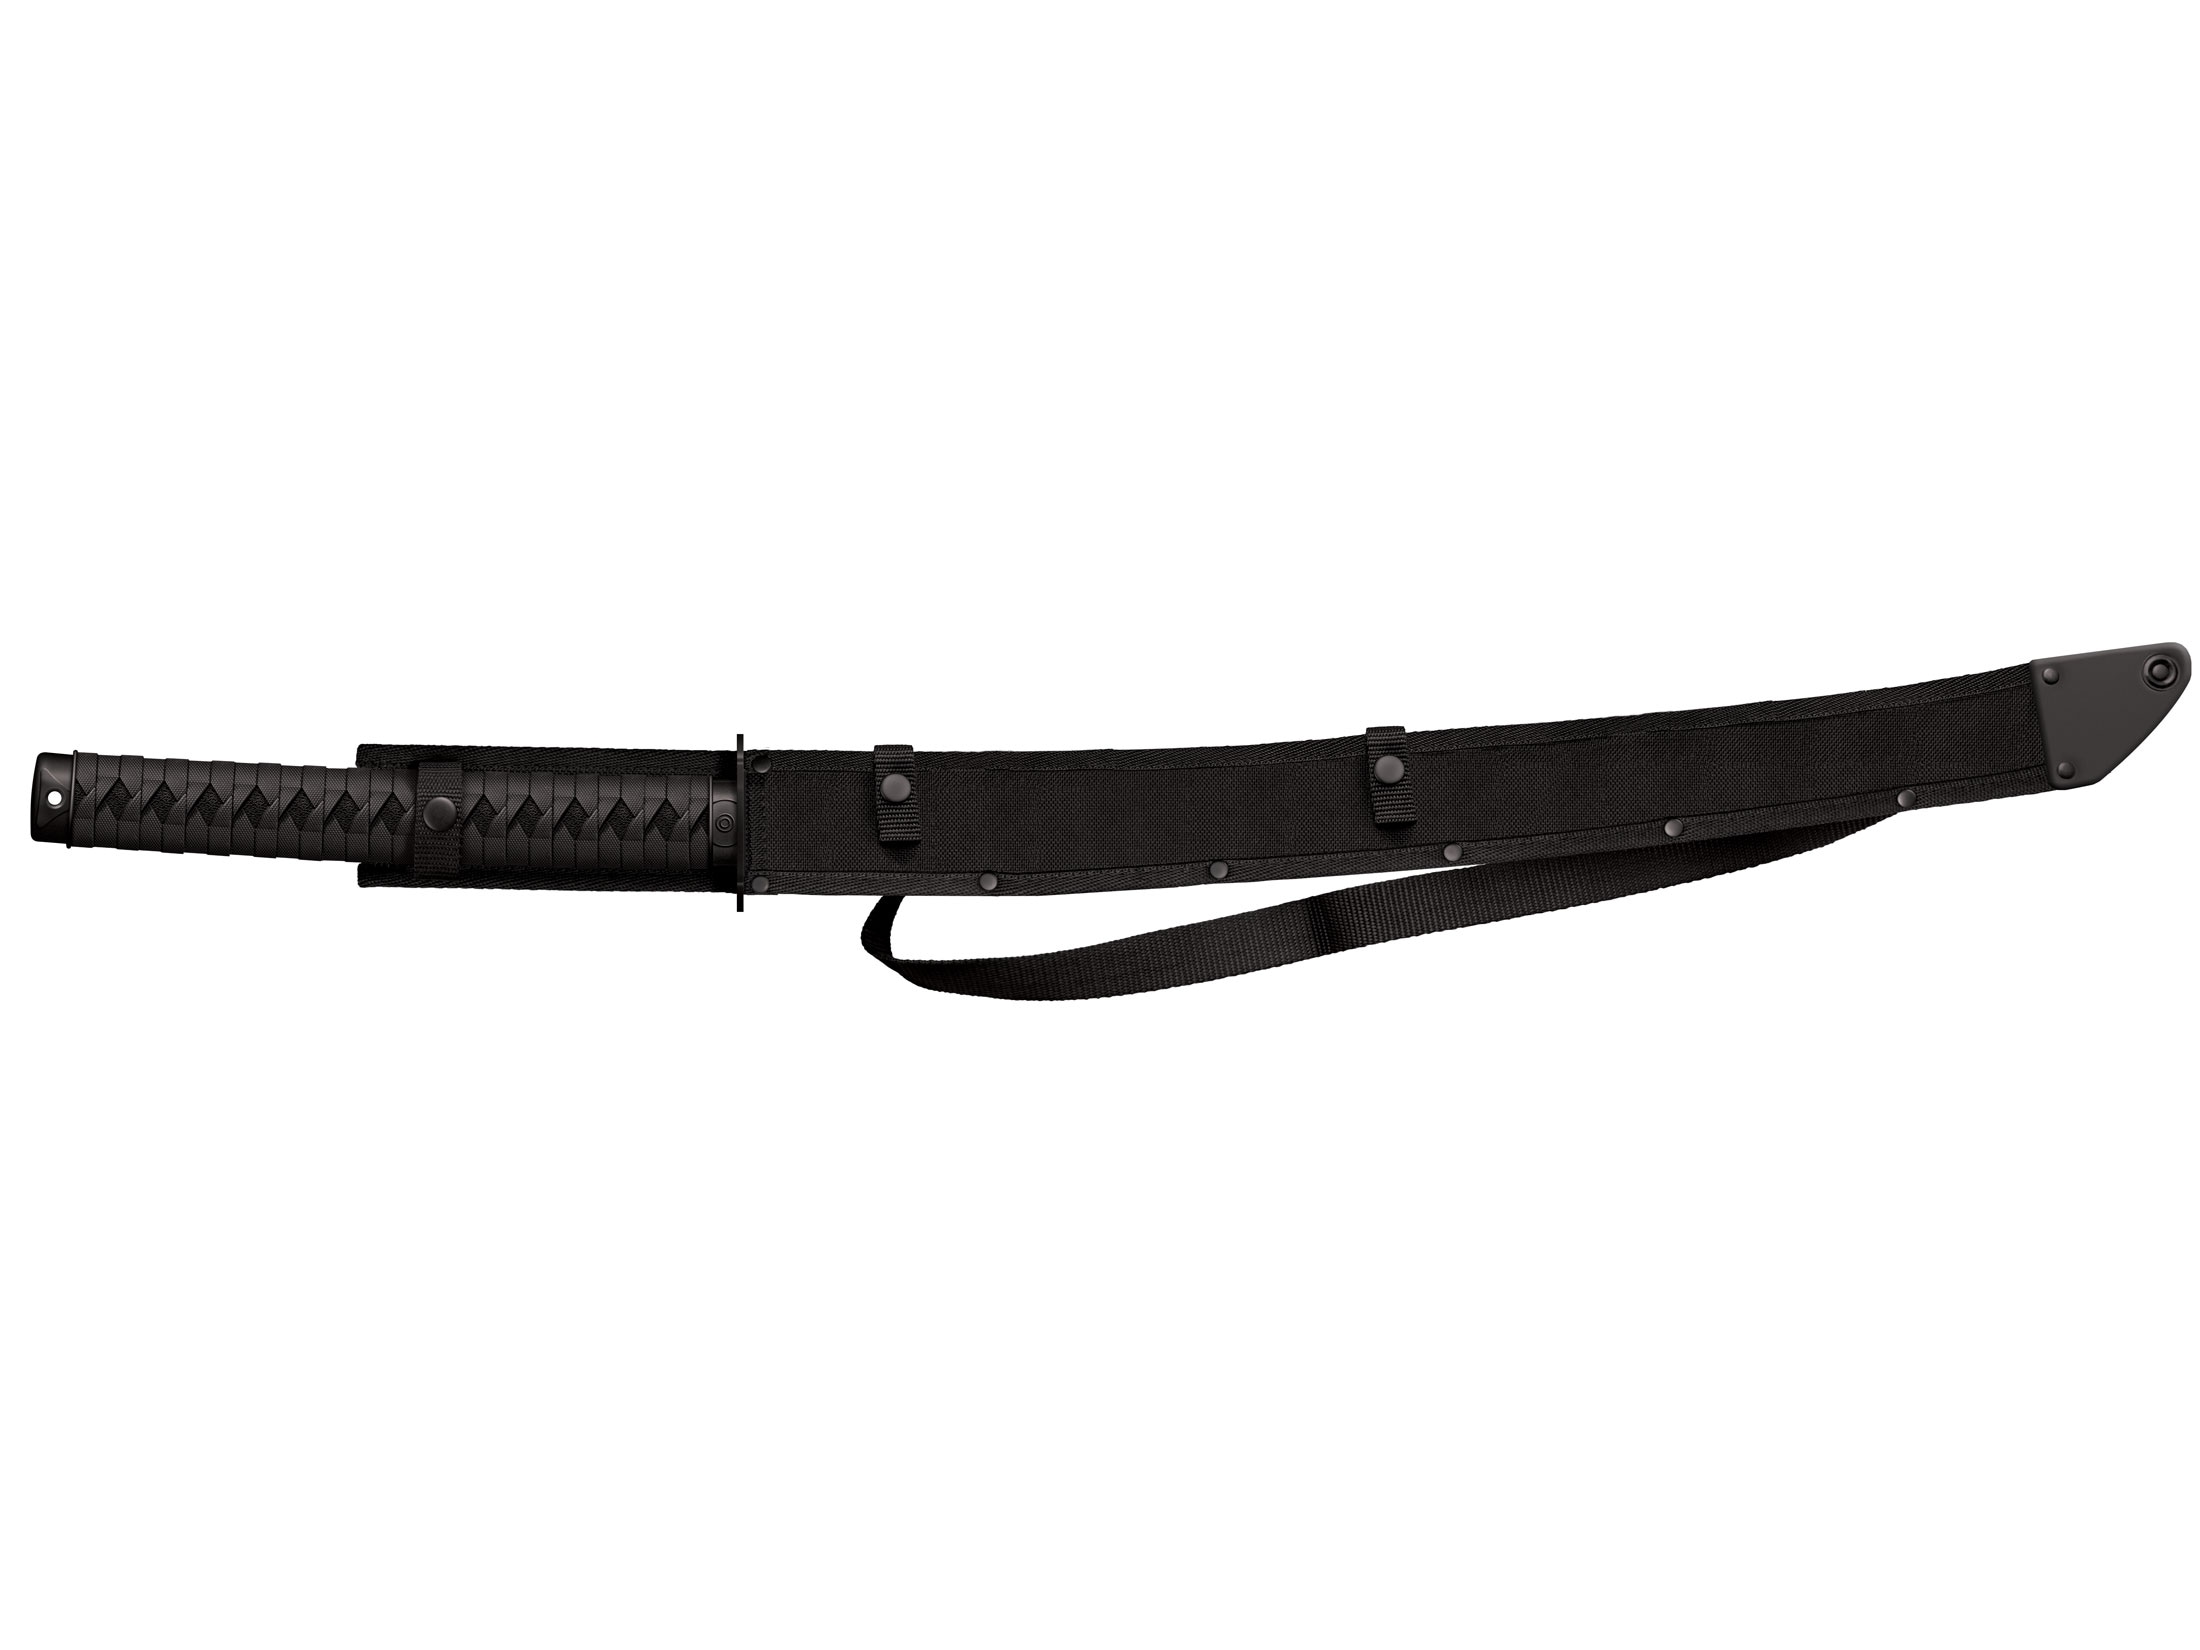 Cold Steel Tactical Katana Machete 24″ 1055 Carbon Steel Blade Polymer Handle Black For Sale